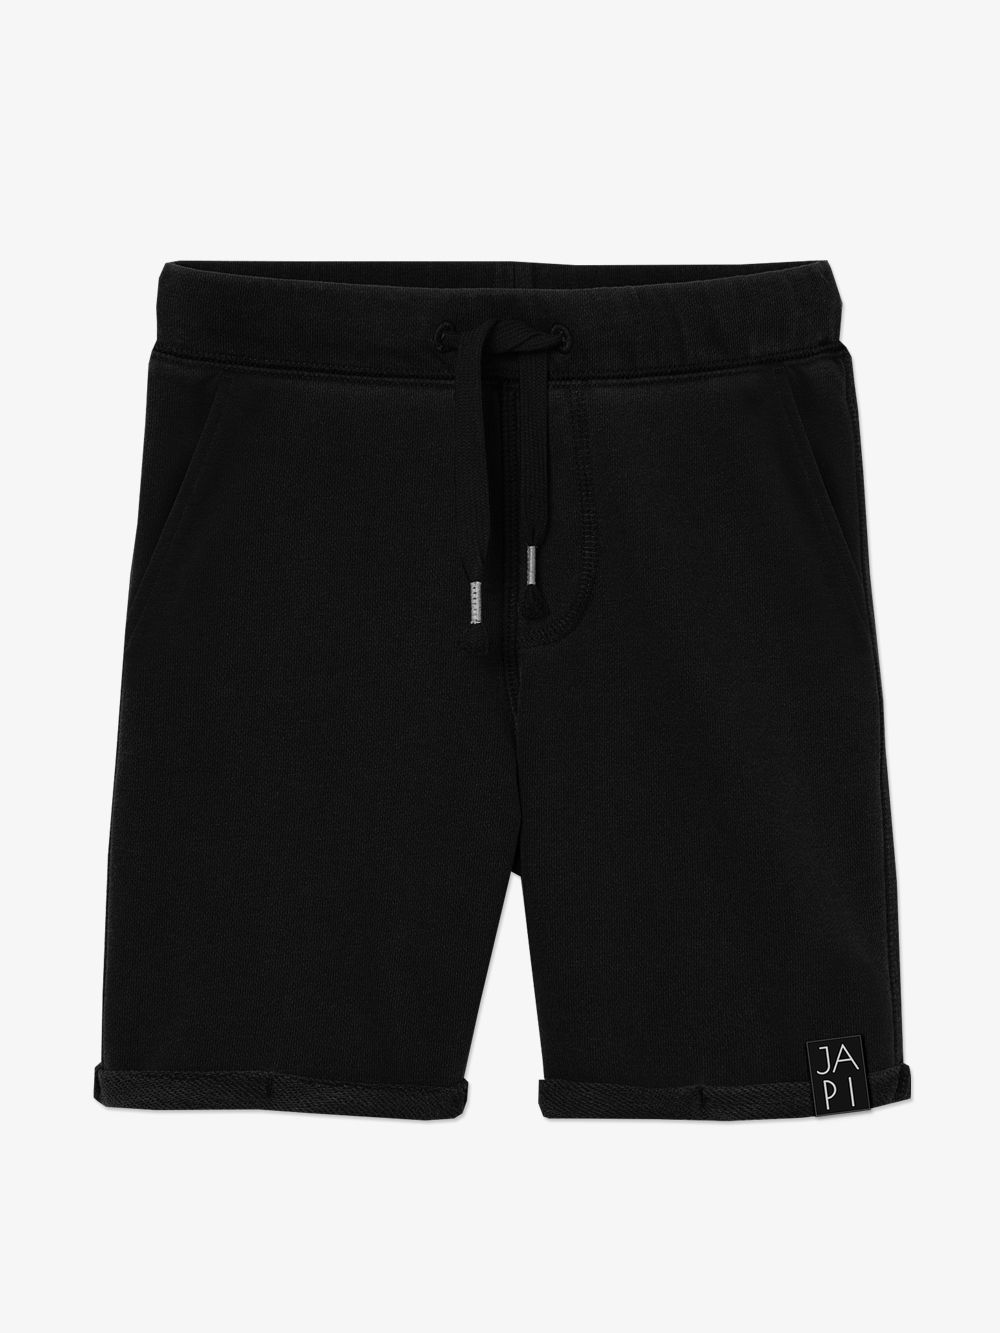 Men's shorts Charcoal